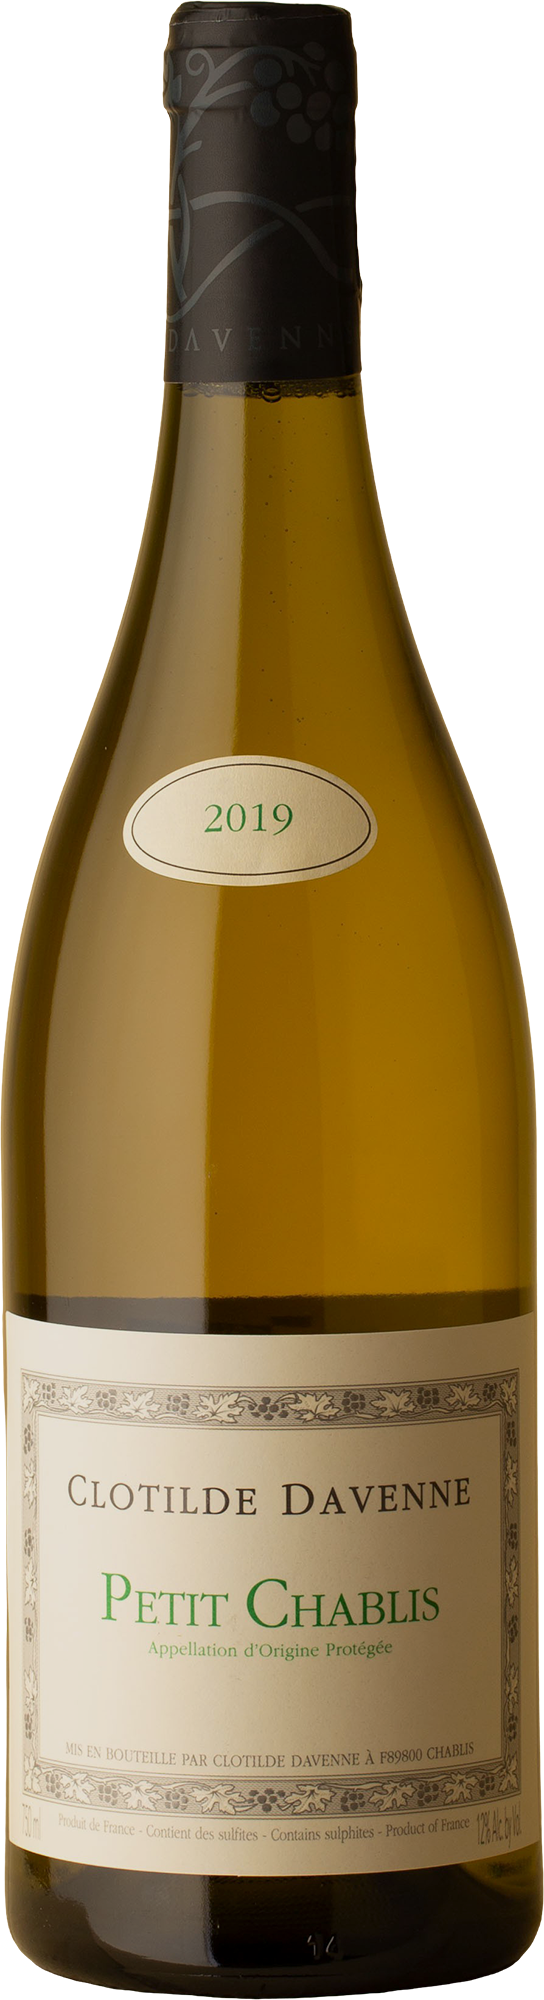 Clotilde Davenne - Petit Chablis Chardonnay  2019